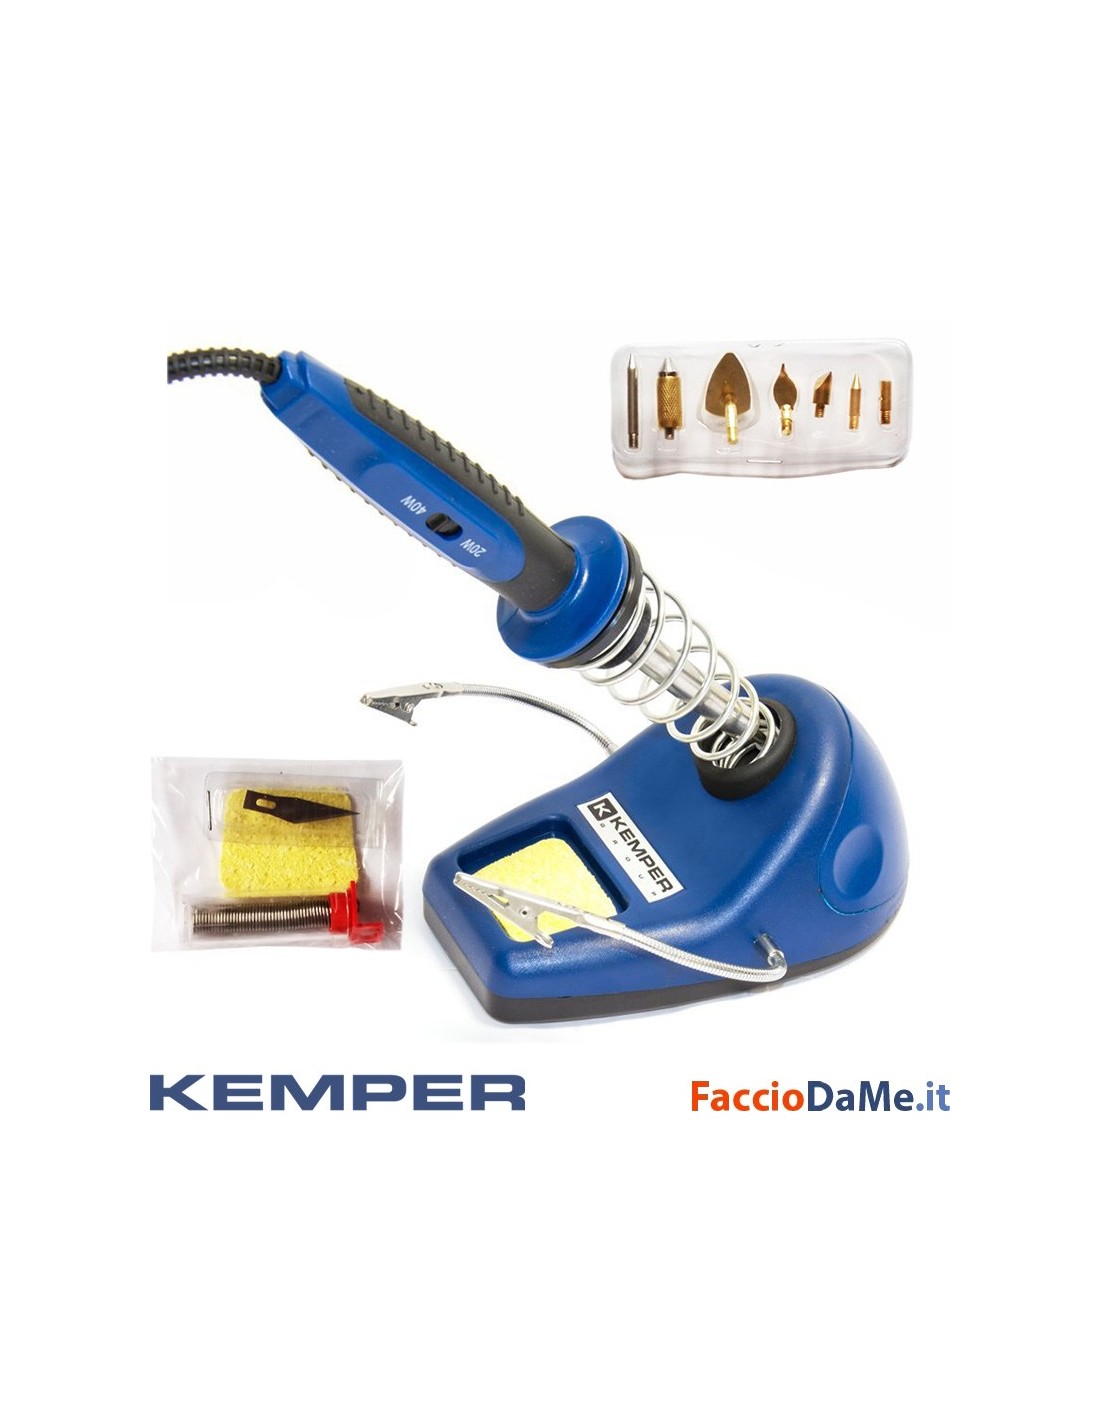 KEMPER 1500KIT Kit pyrograveur - 40W + accessoires